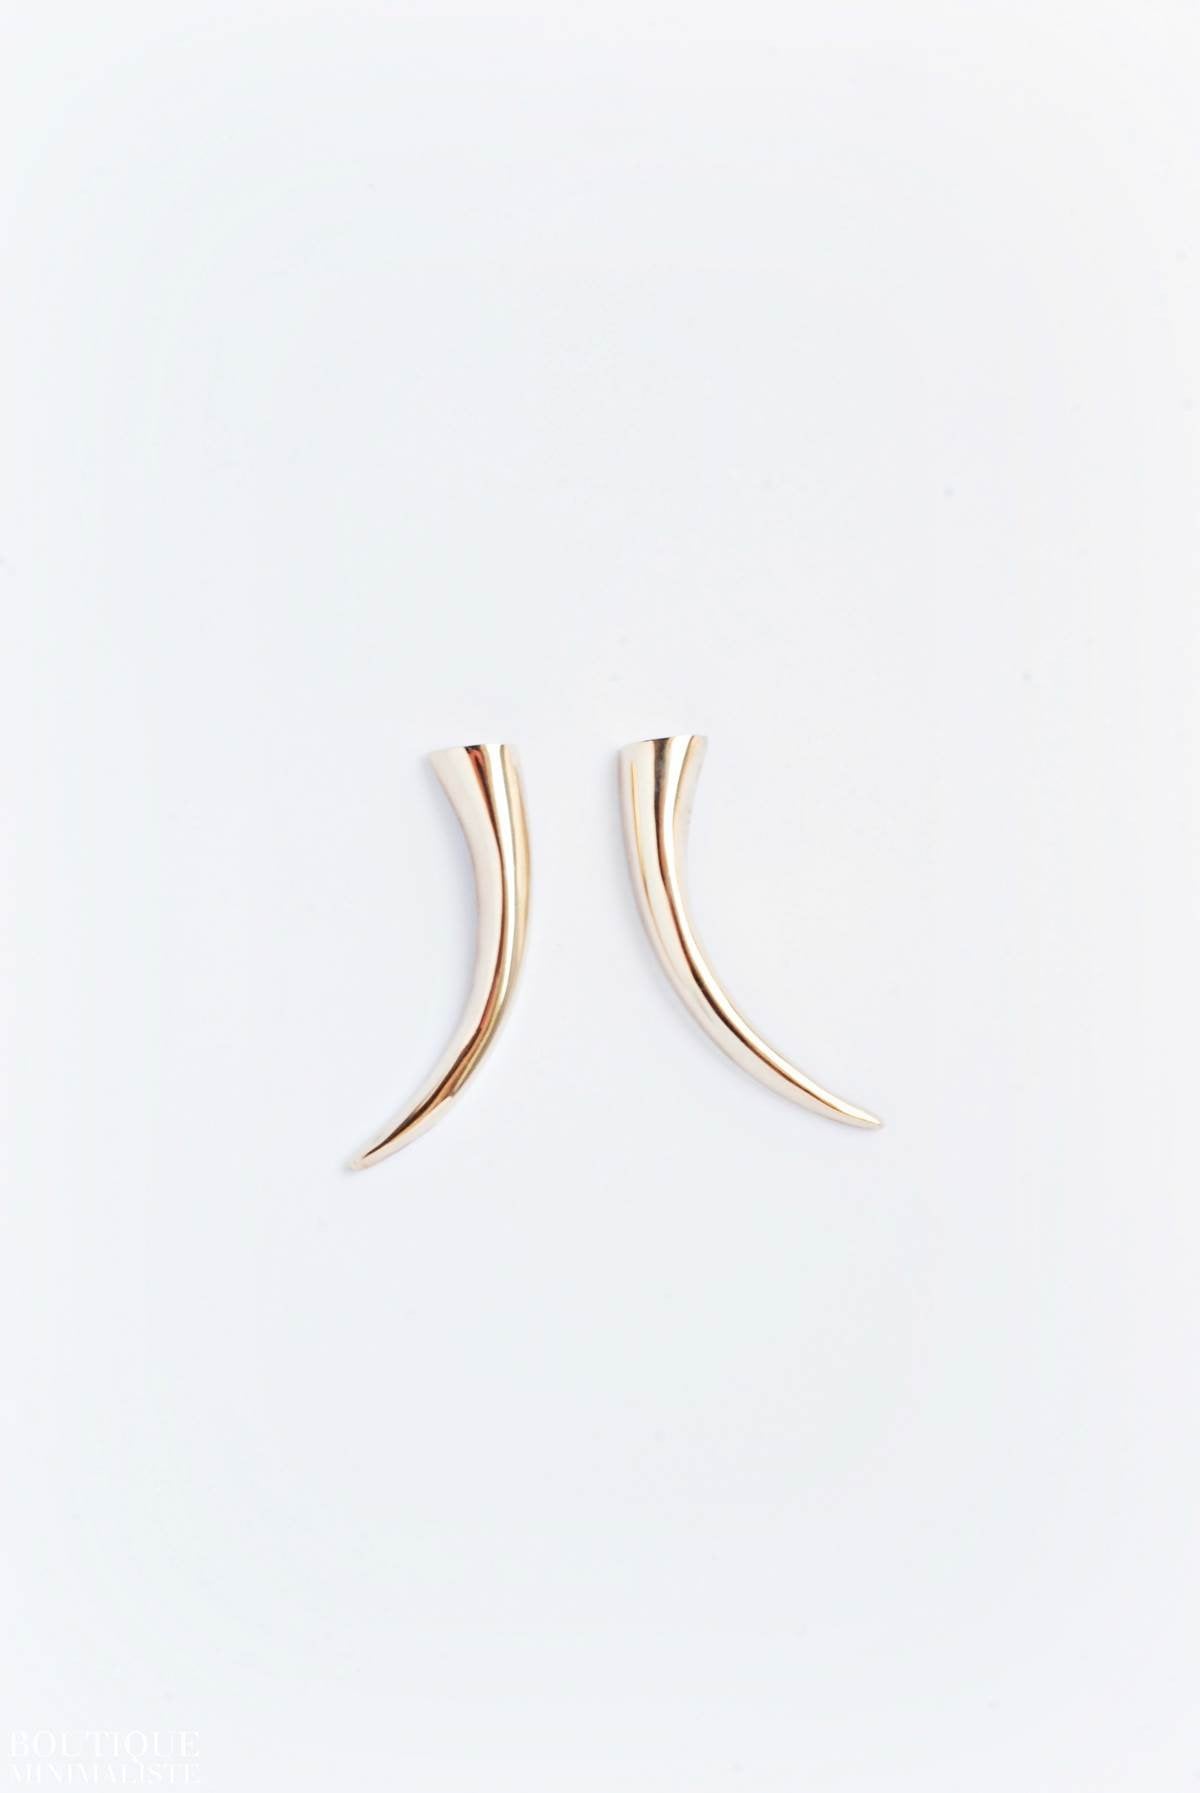 Tusk Earrings - Boutique Minimaliste has waterproof, durable, elegant and vintage inspired jewelry